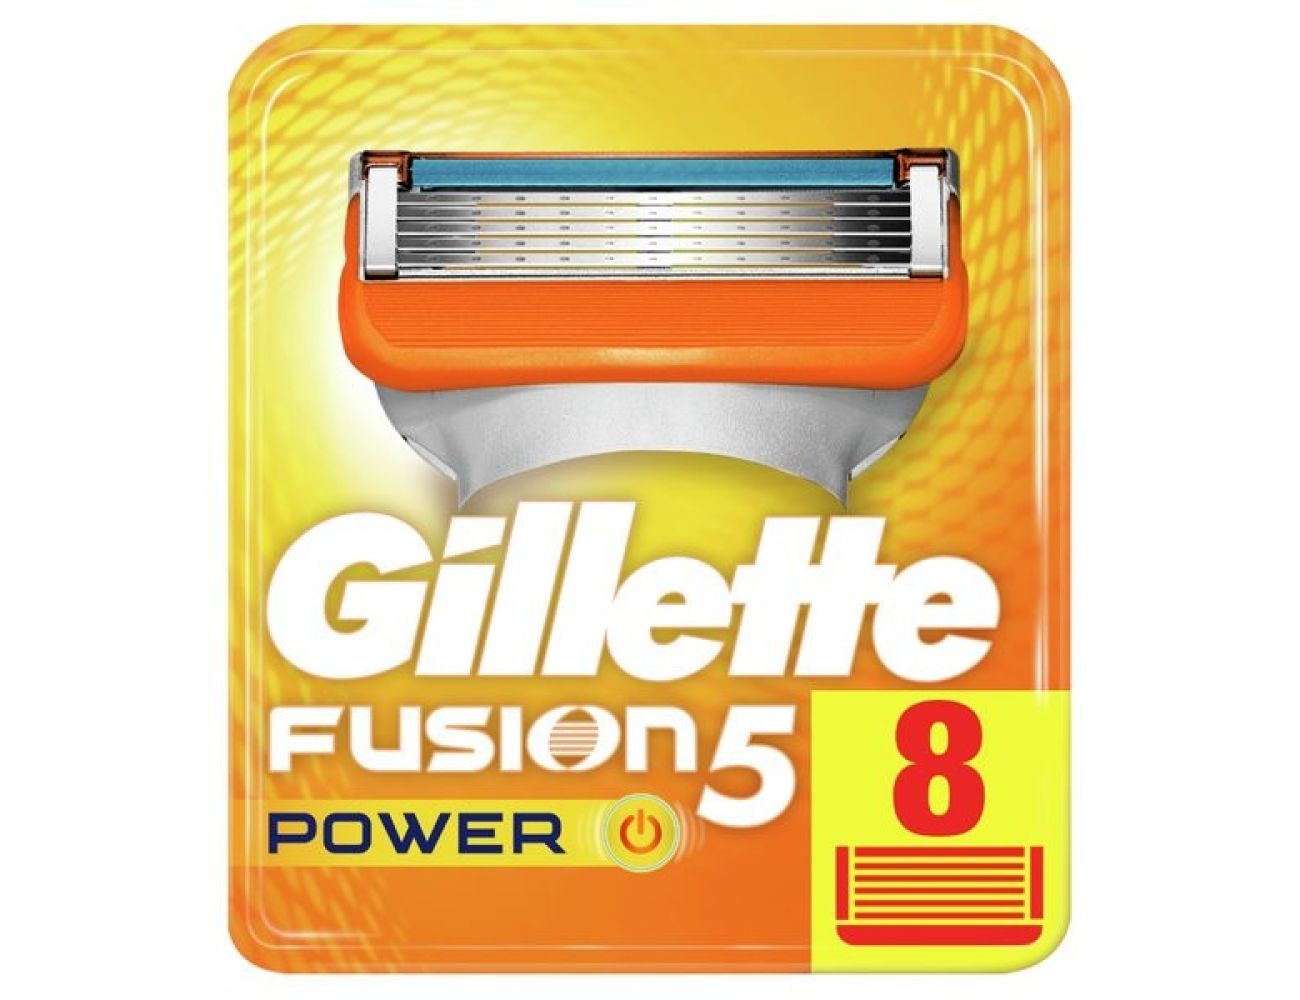 Gillette Fusion Power лезвия для бритвы 8 шт 7702018877621